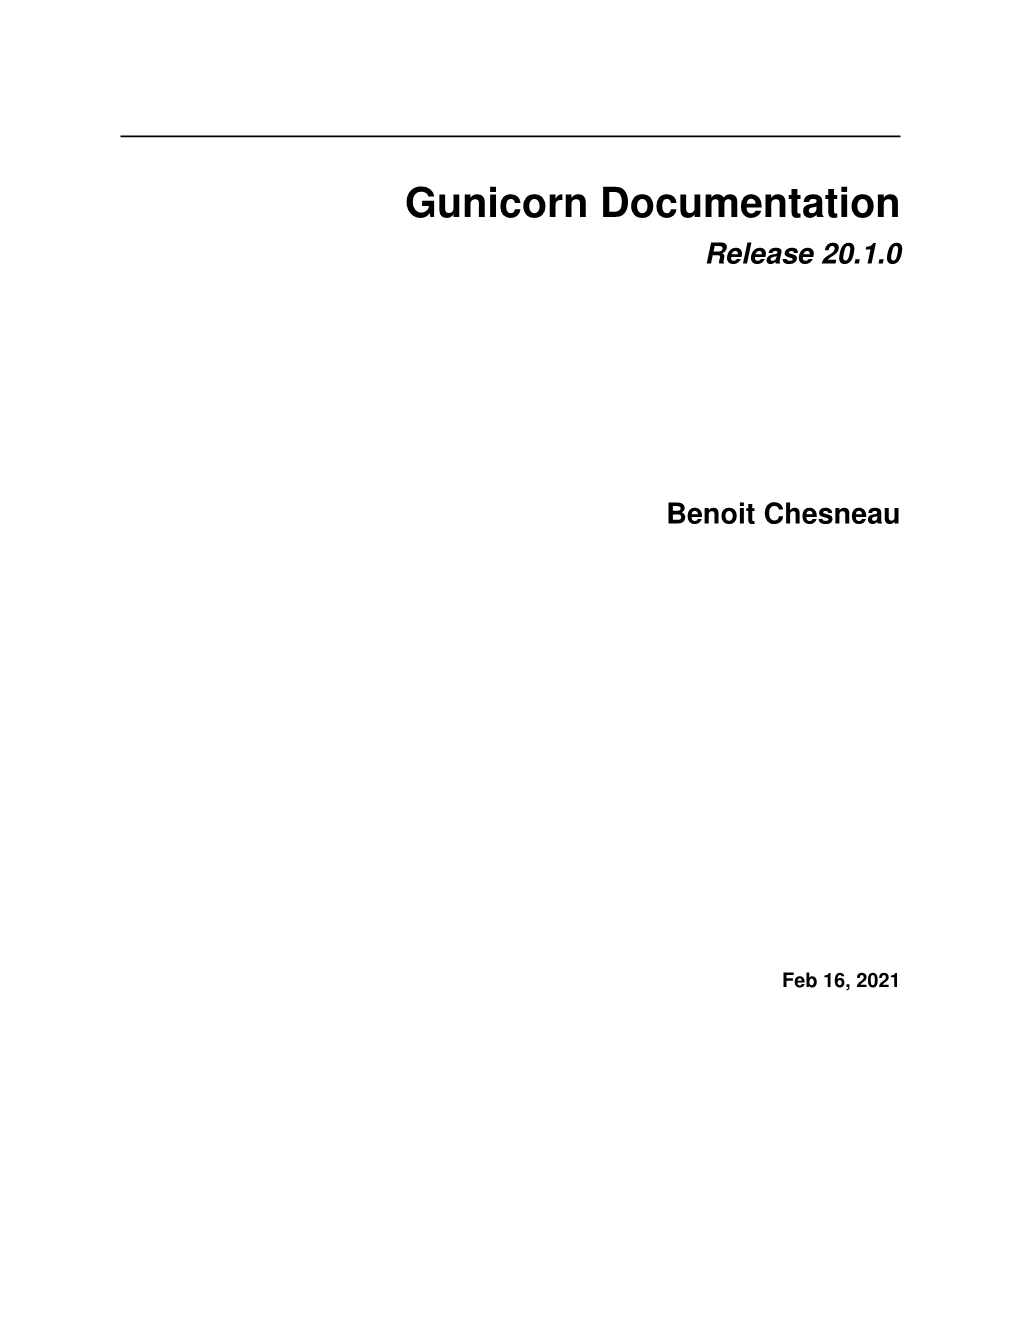 Gunicorn Documentation Release 20.1.0